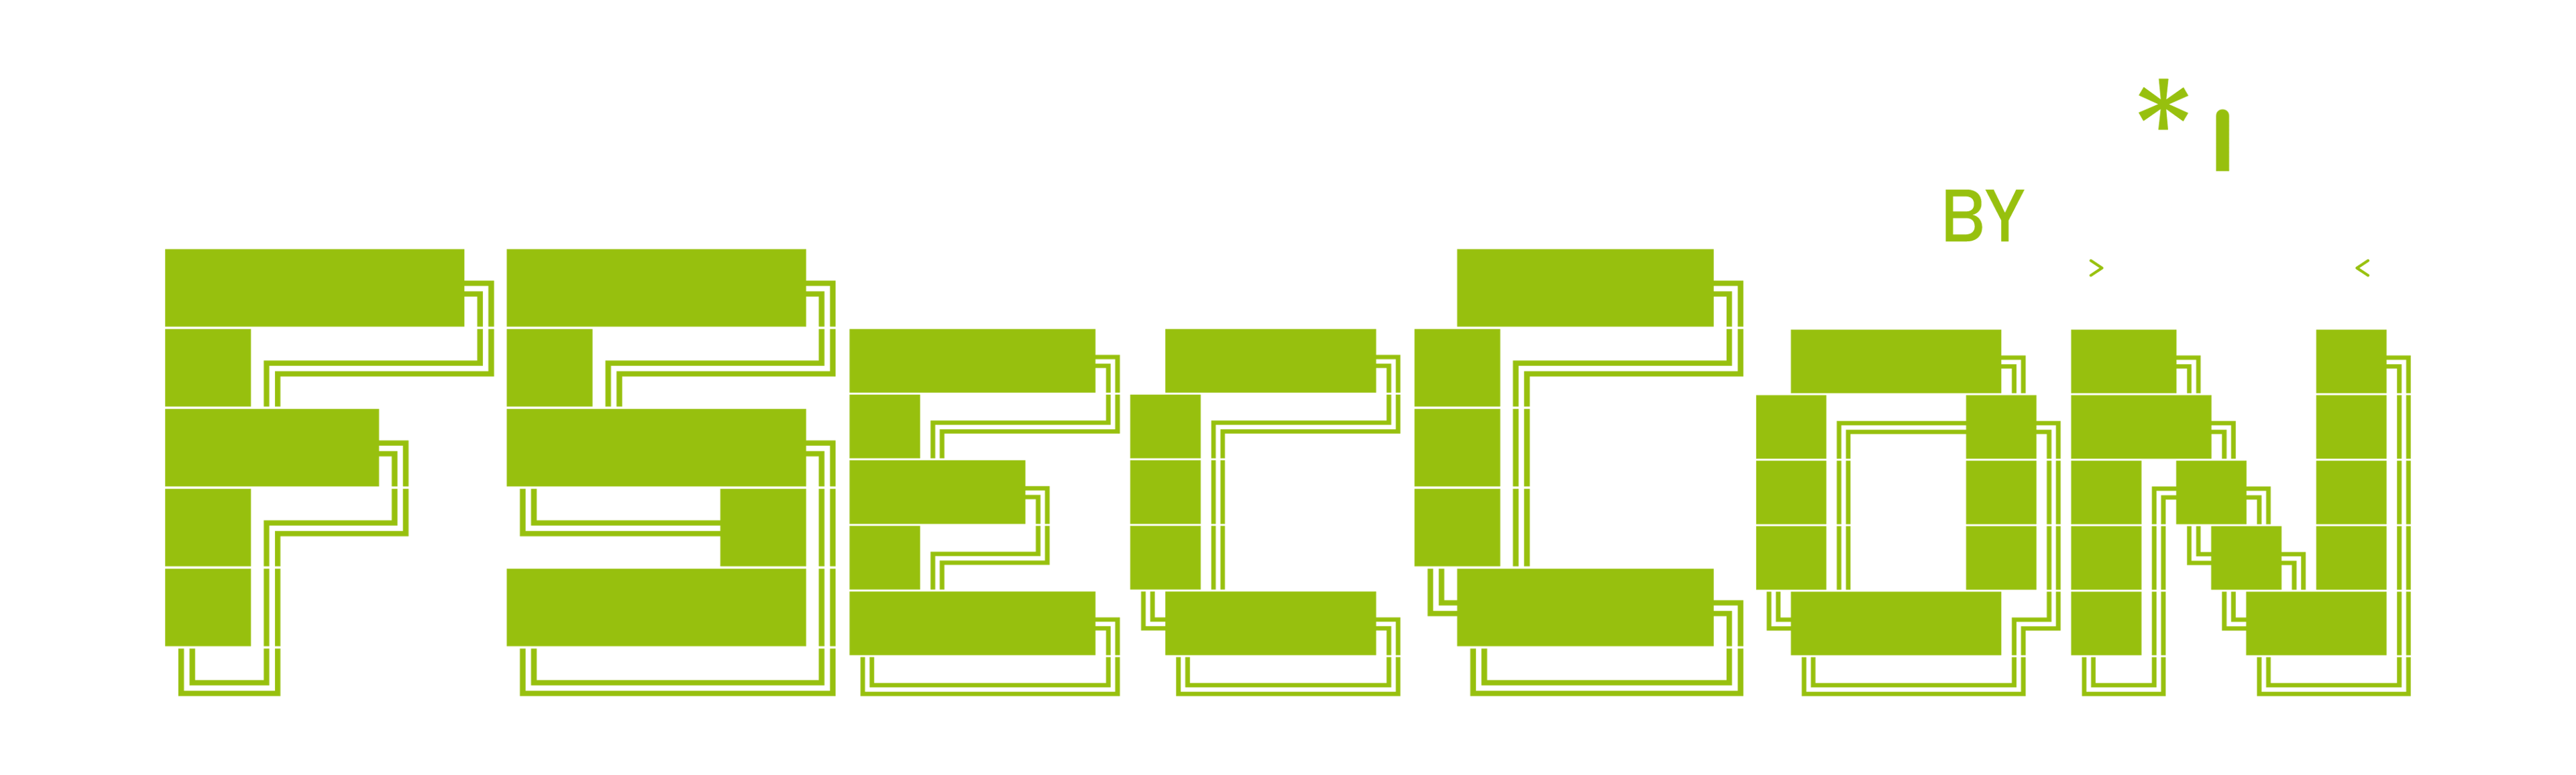 Fword Logo